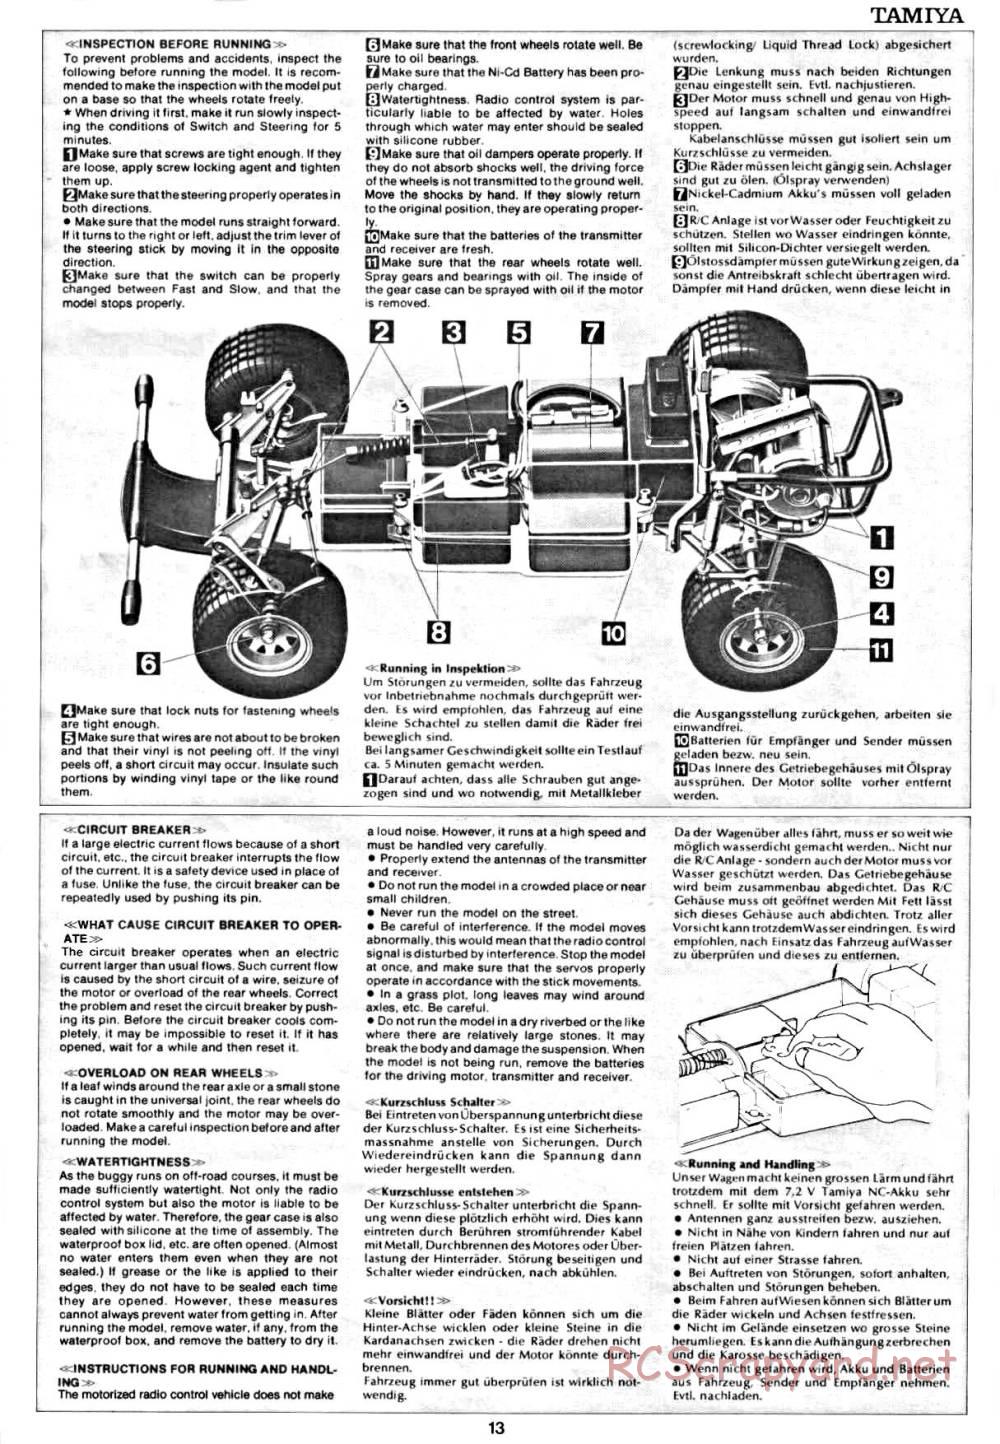 Tamiya - Ford F-150 Ranger XLT - 58027 - Manual - Page 13